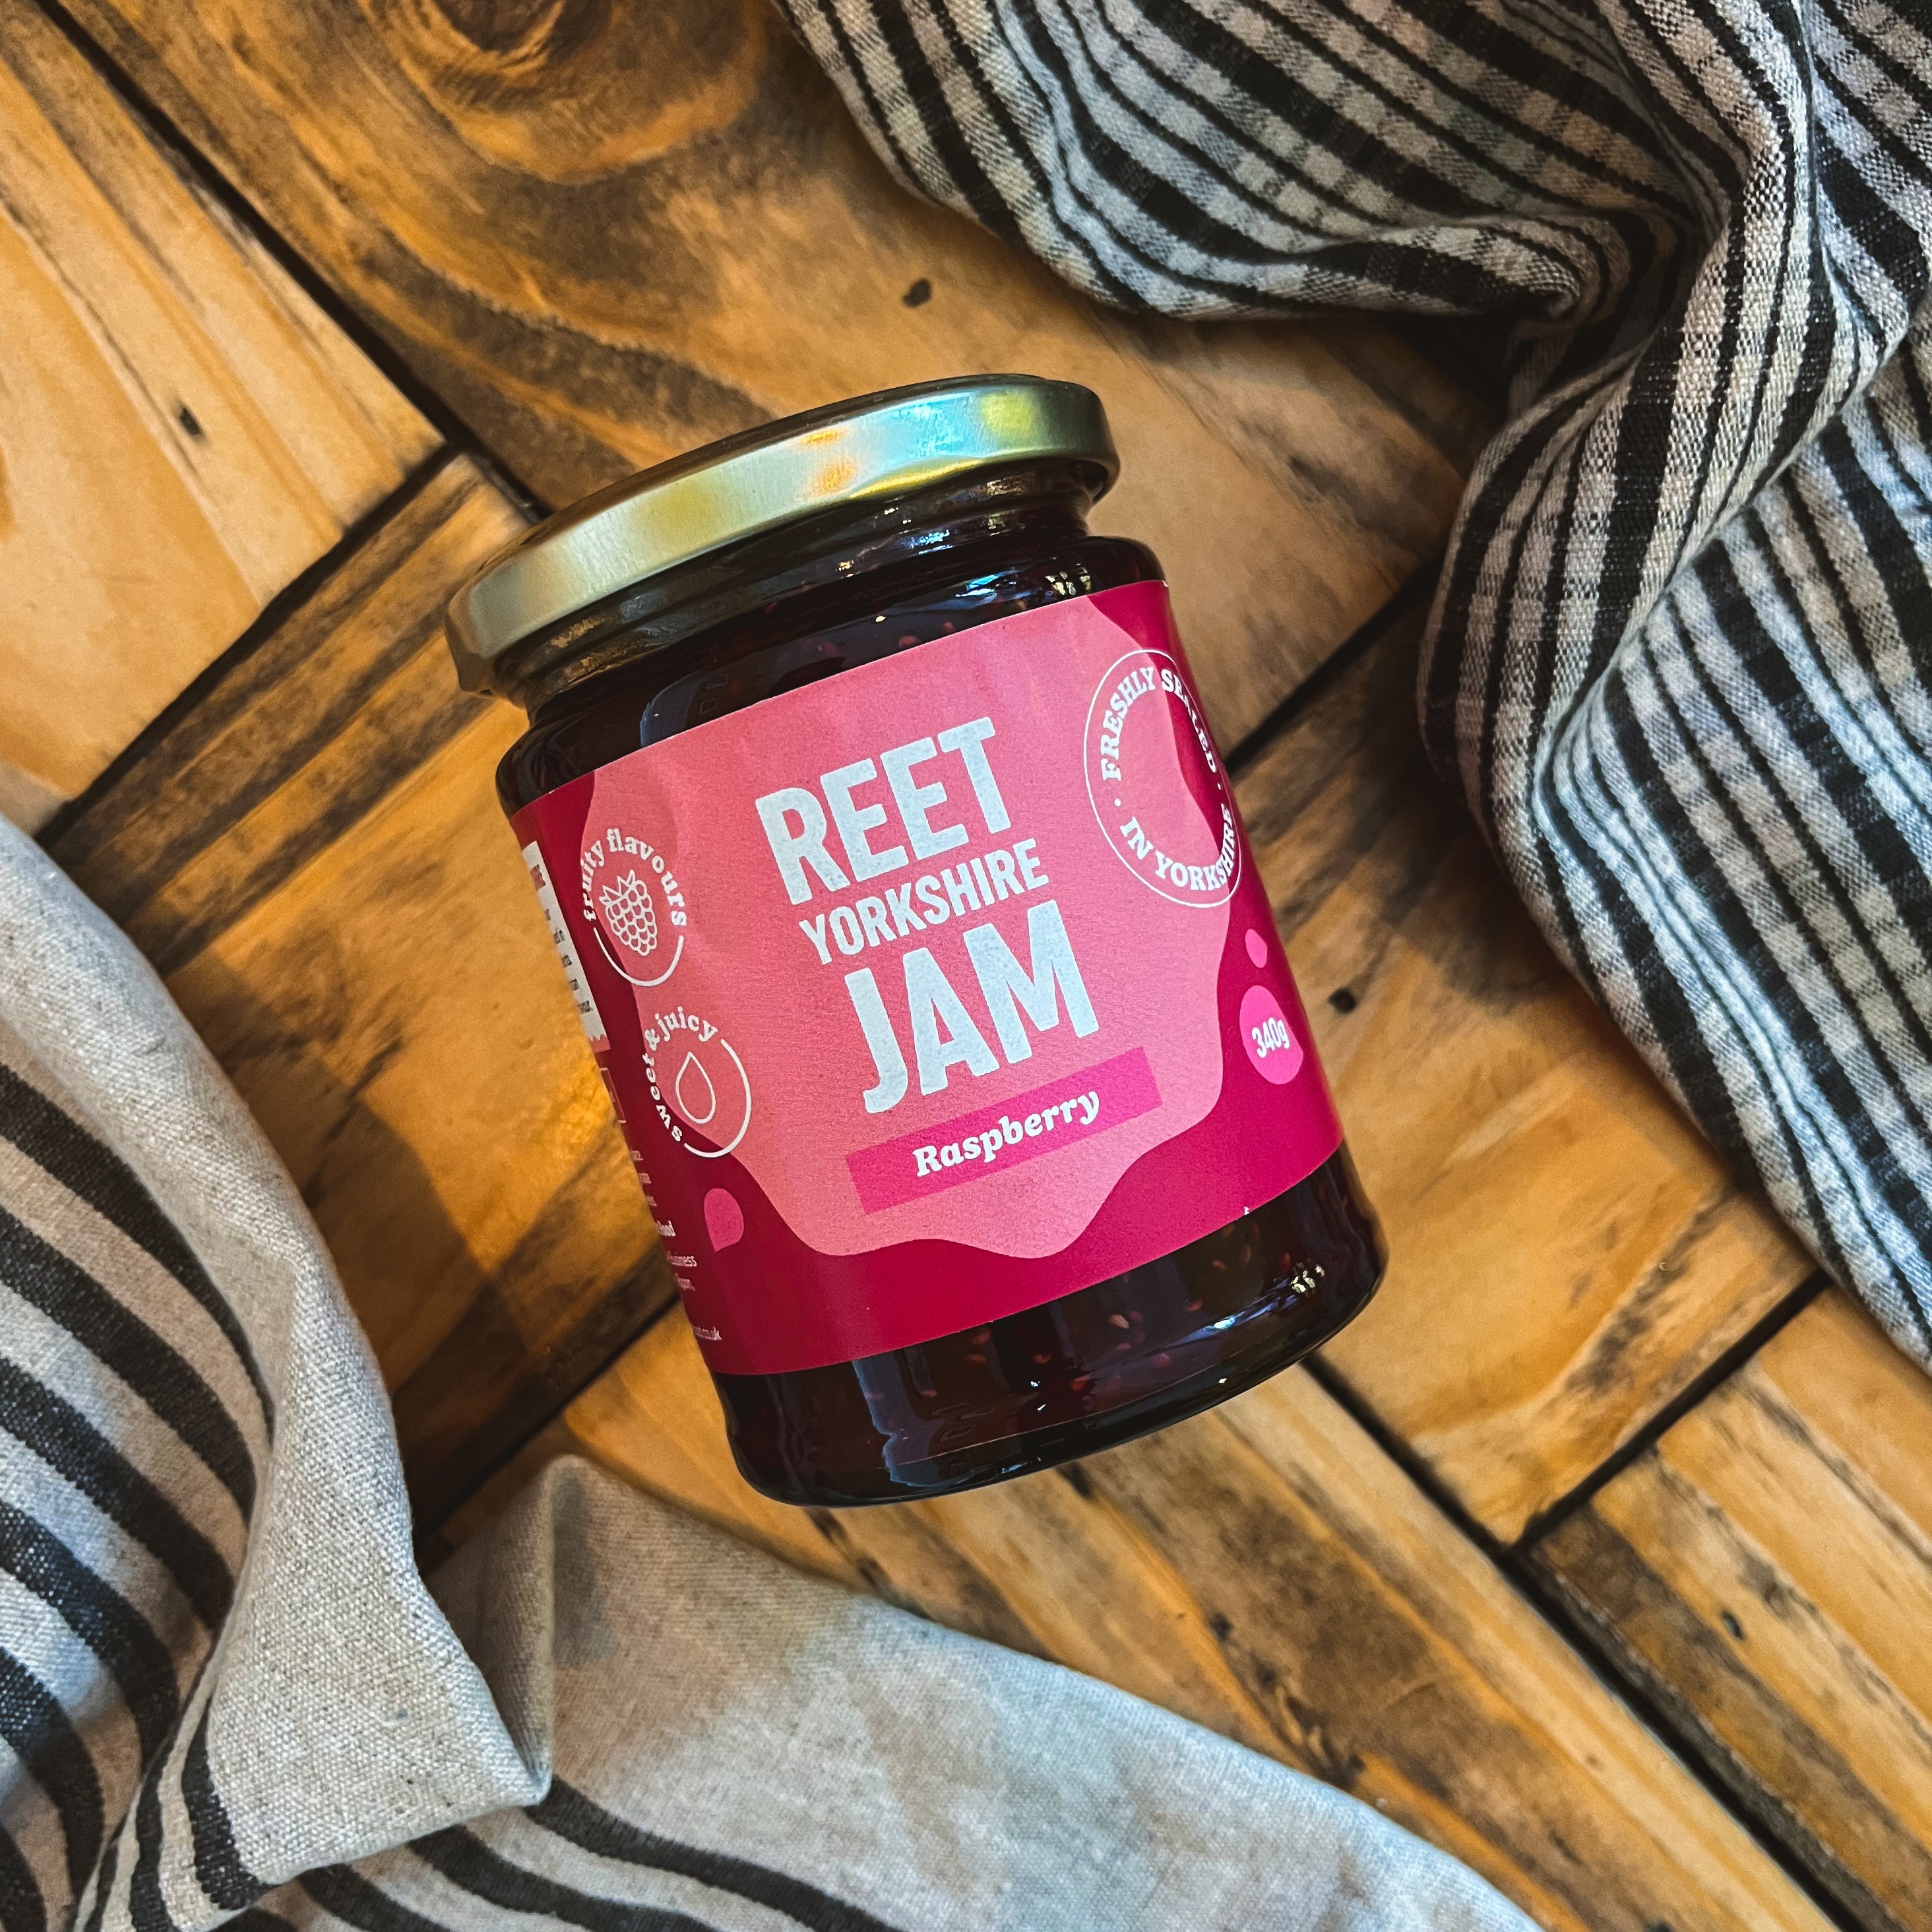 Raspberry Jam - Reet Yorkshire